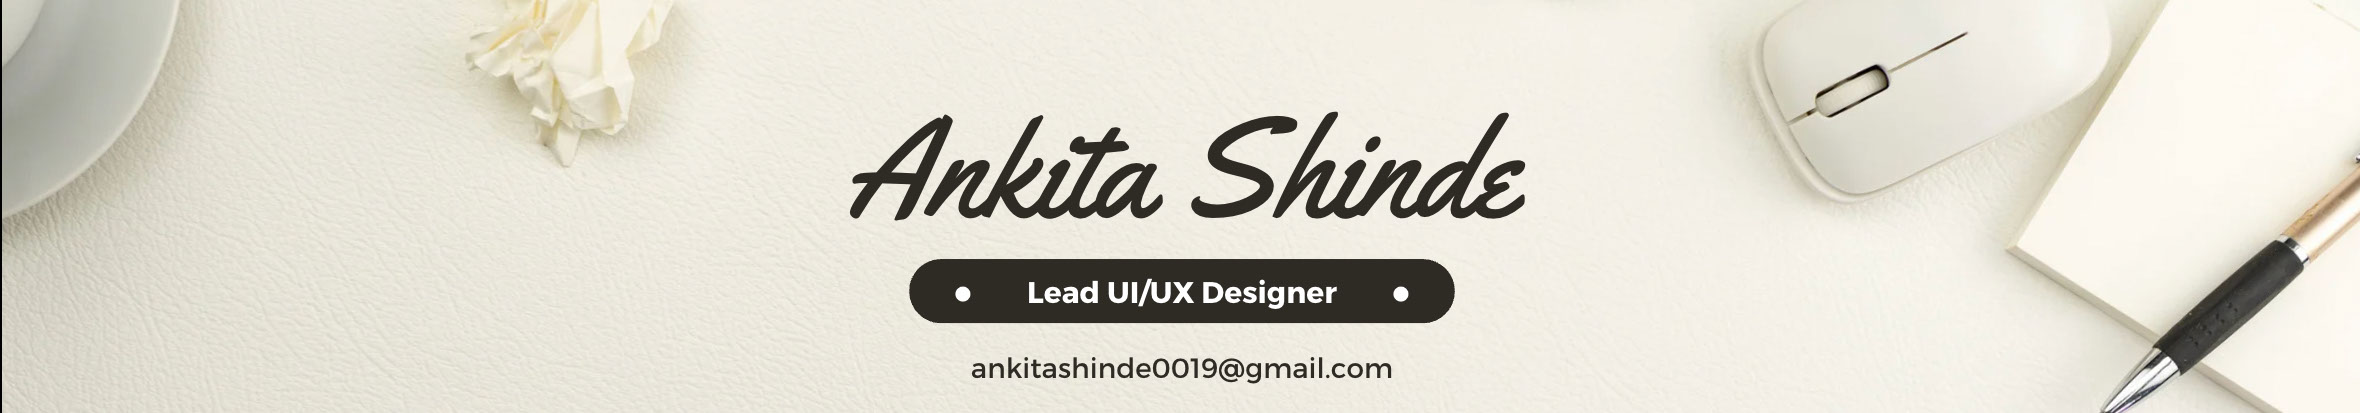 Ankita Shinde's profile banner